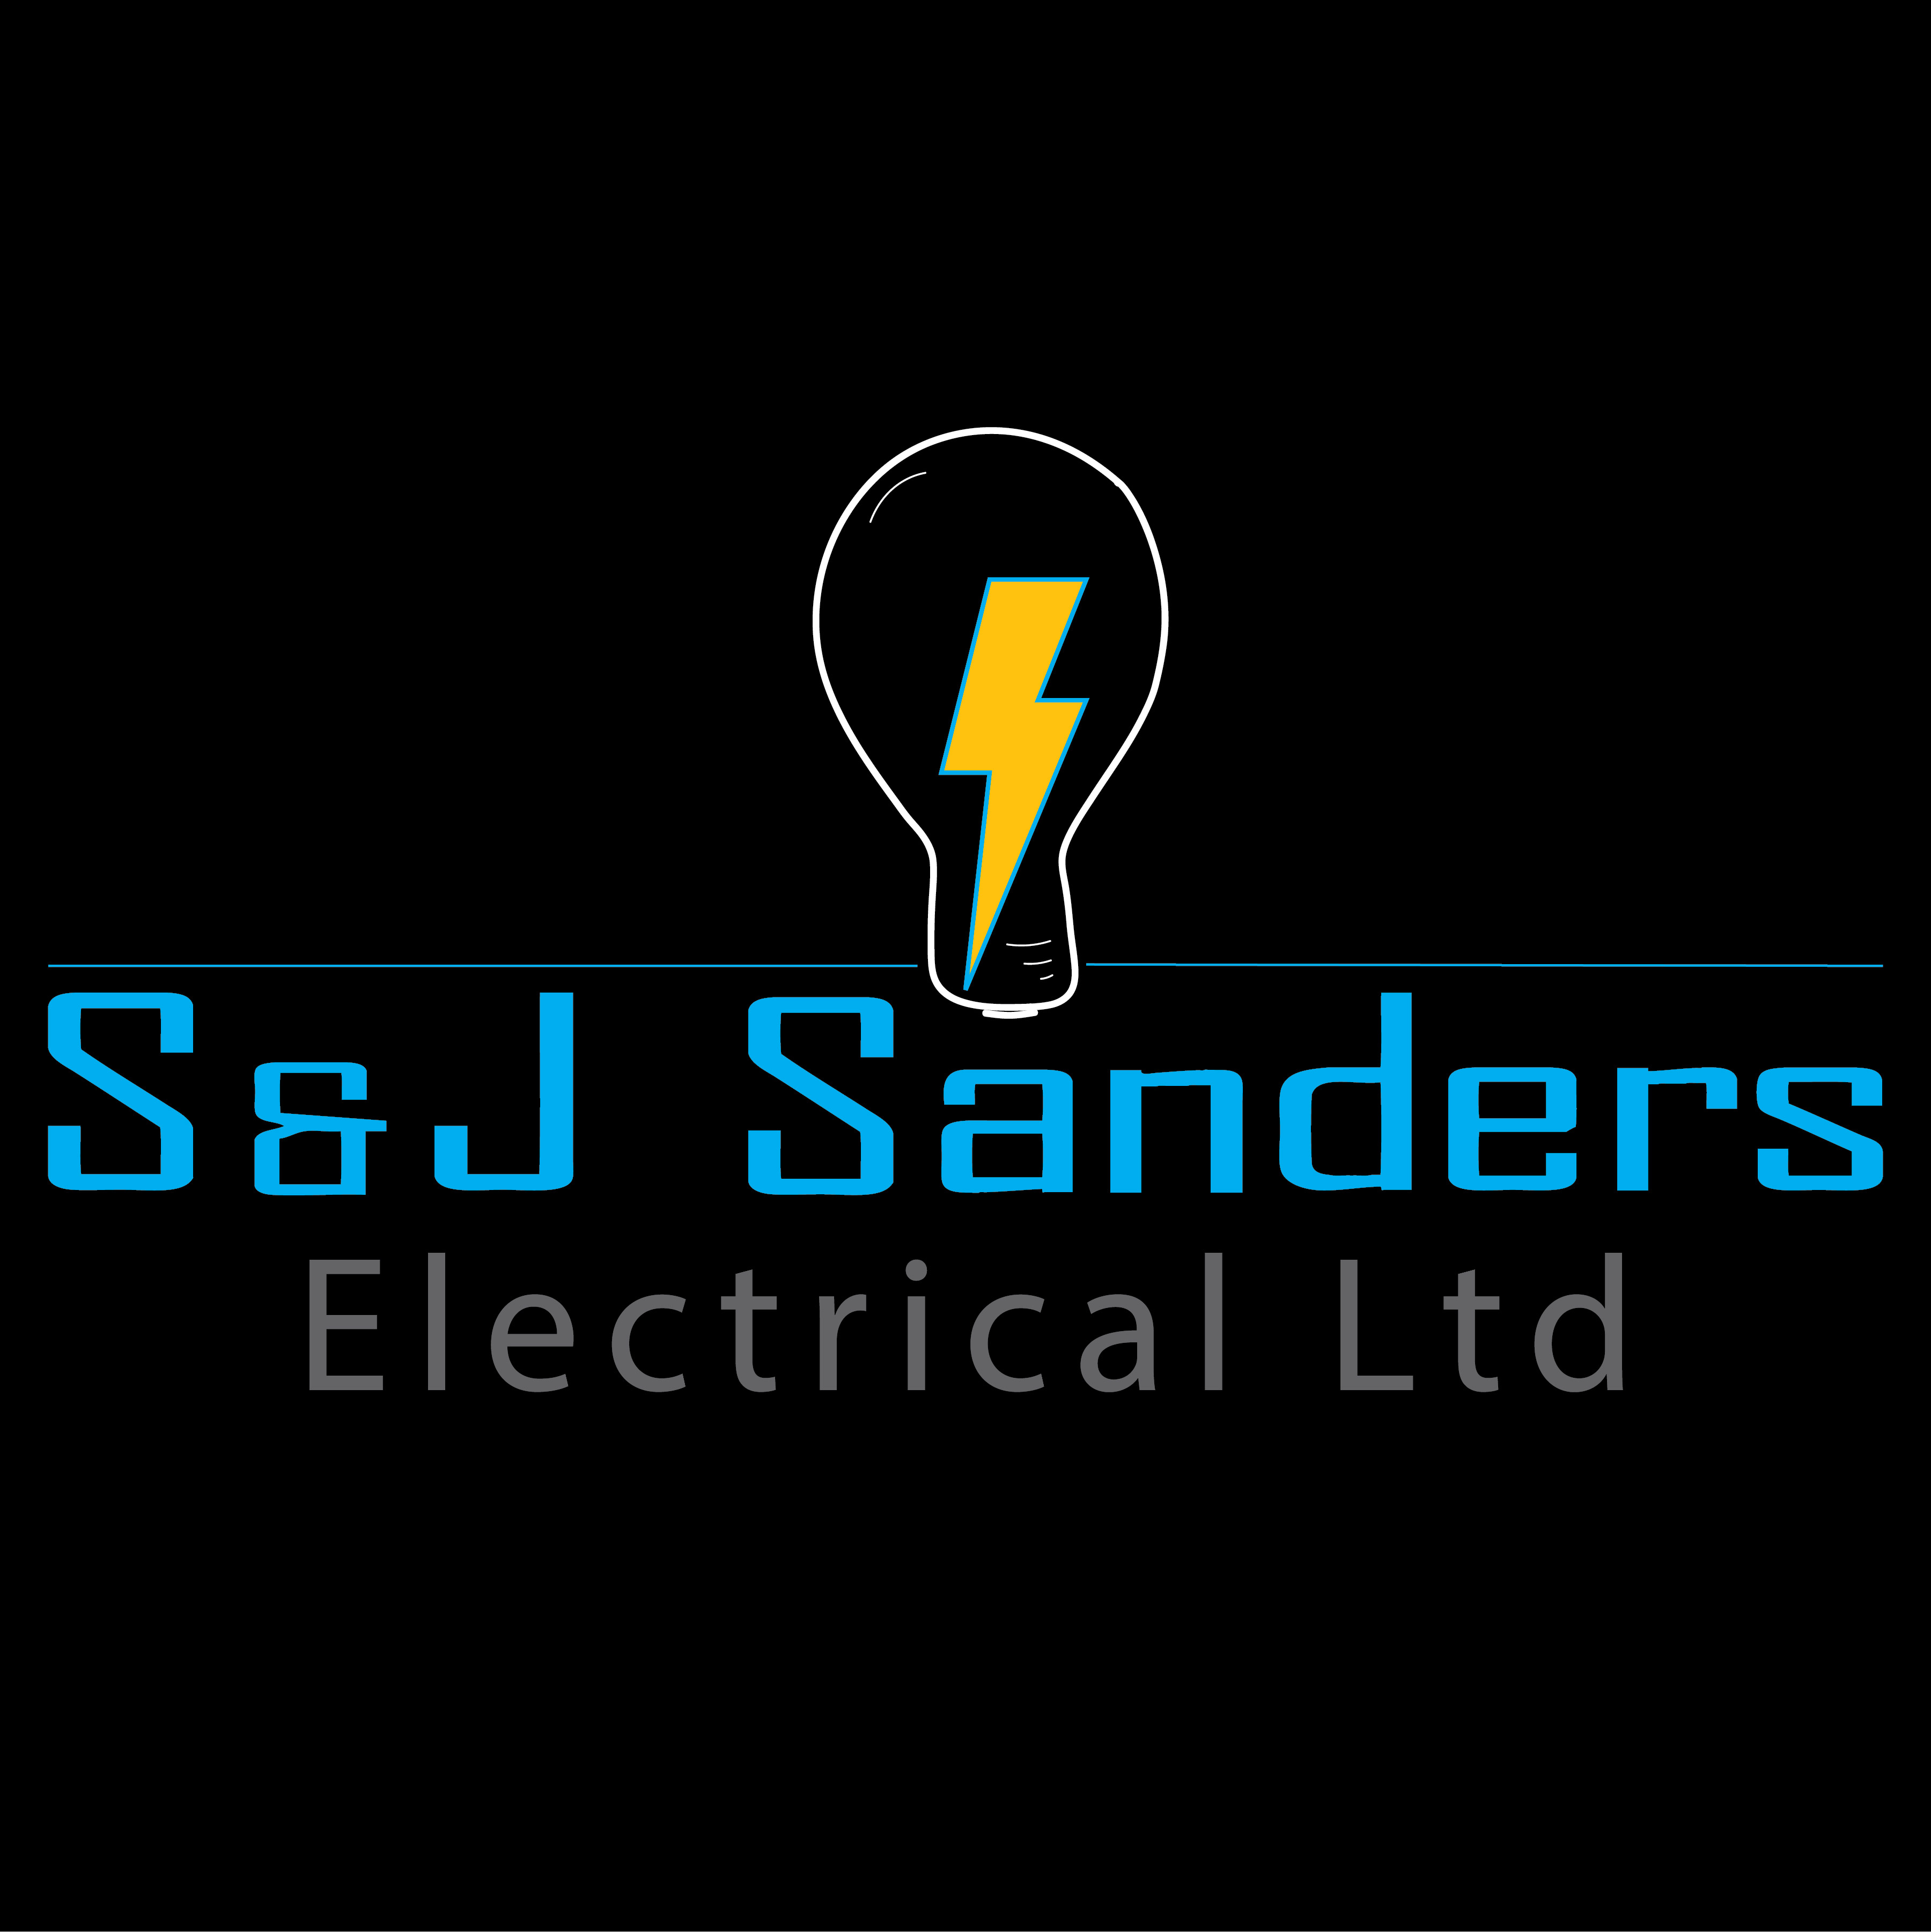 S&J Sanders Electrical Ltd